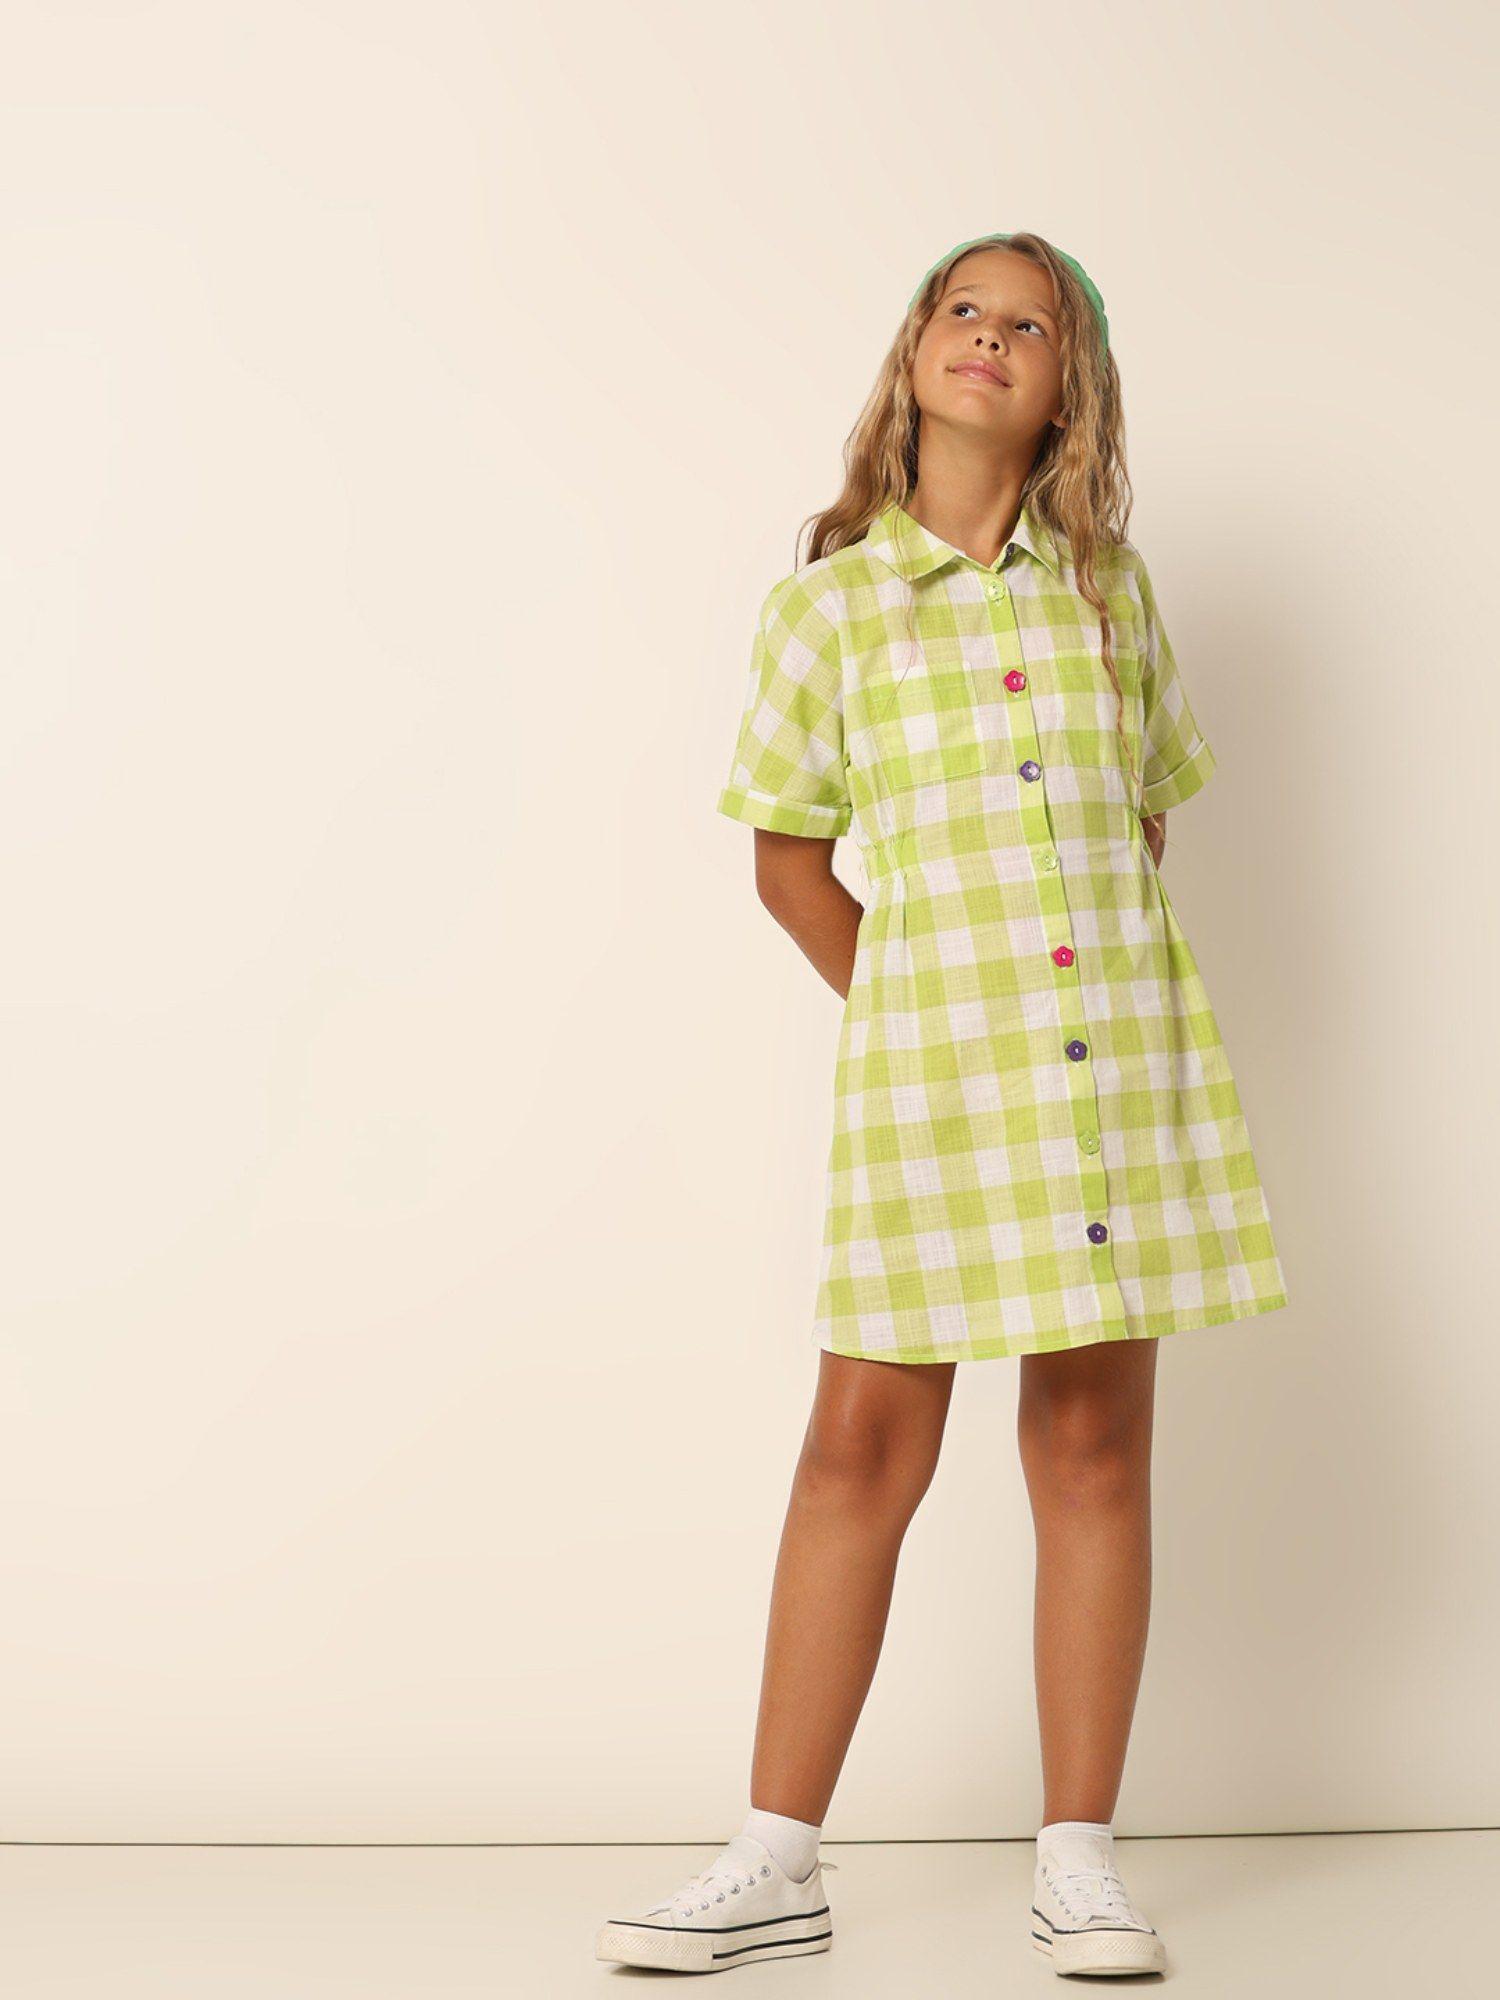 girls checks above knee length green shirt dress